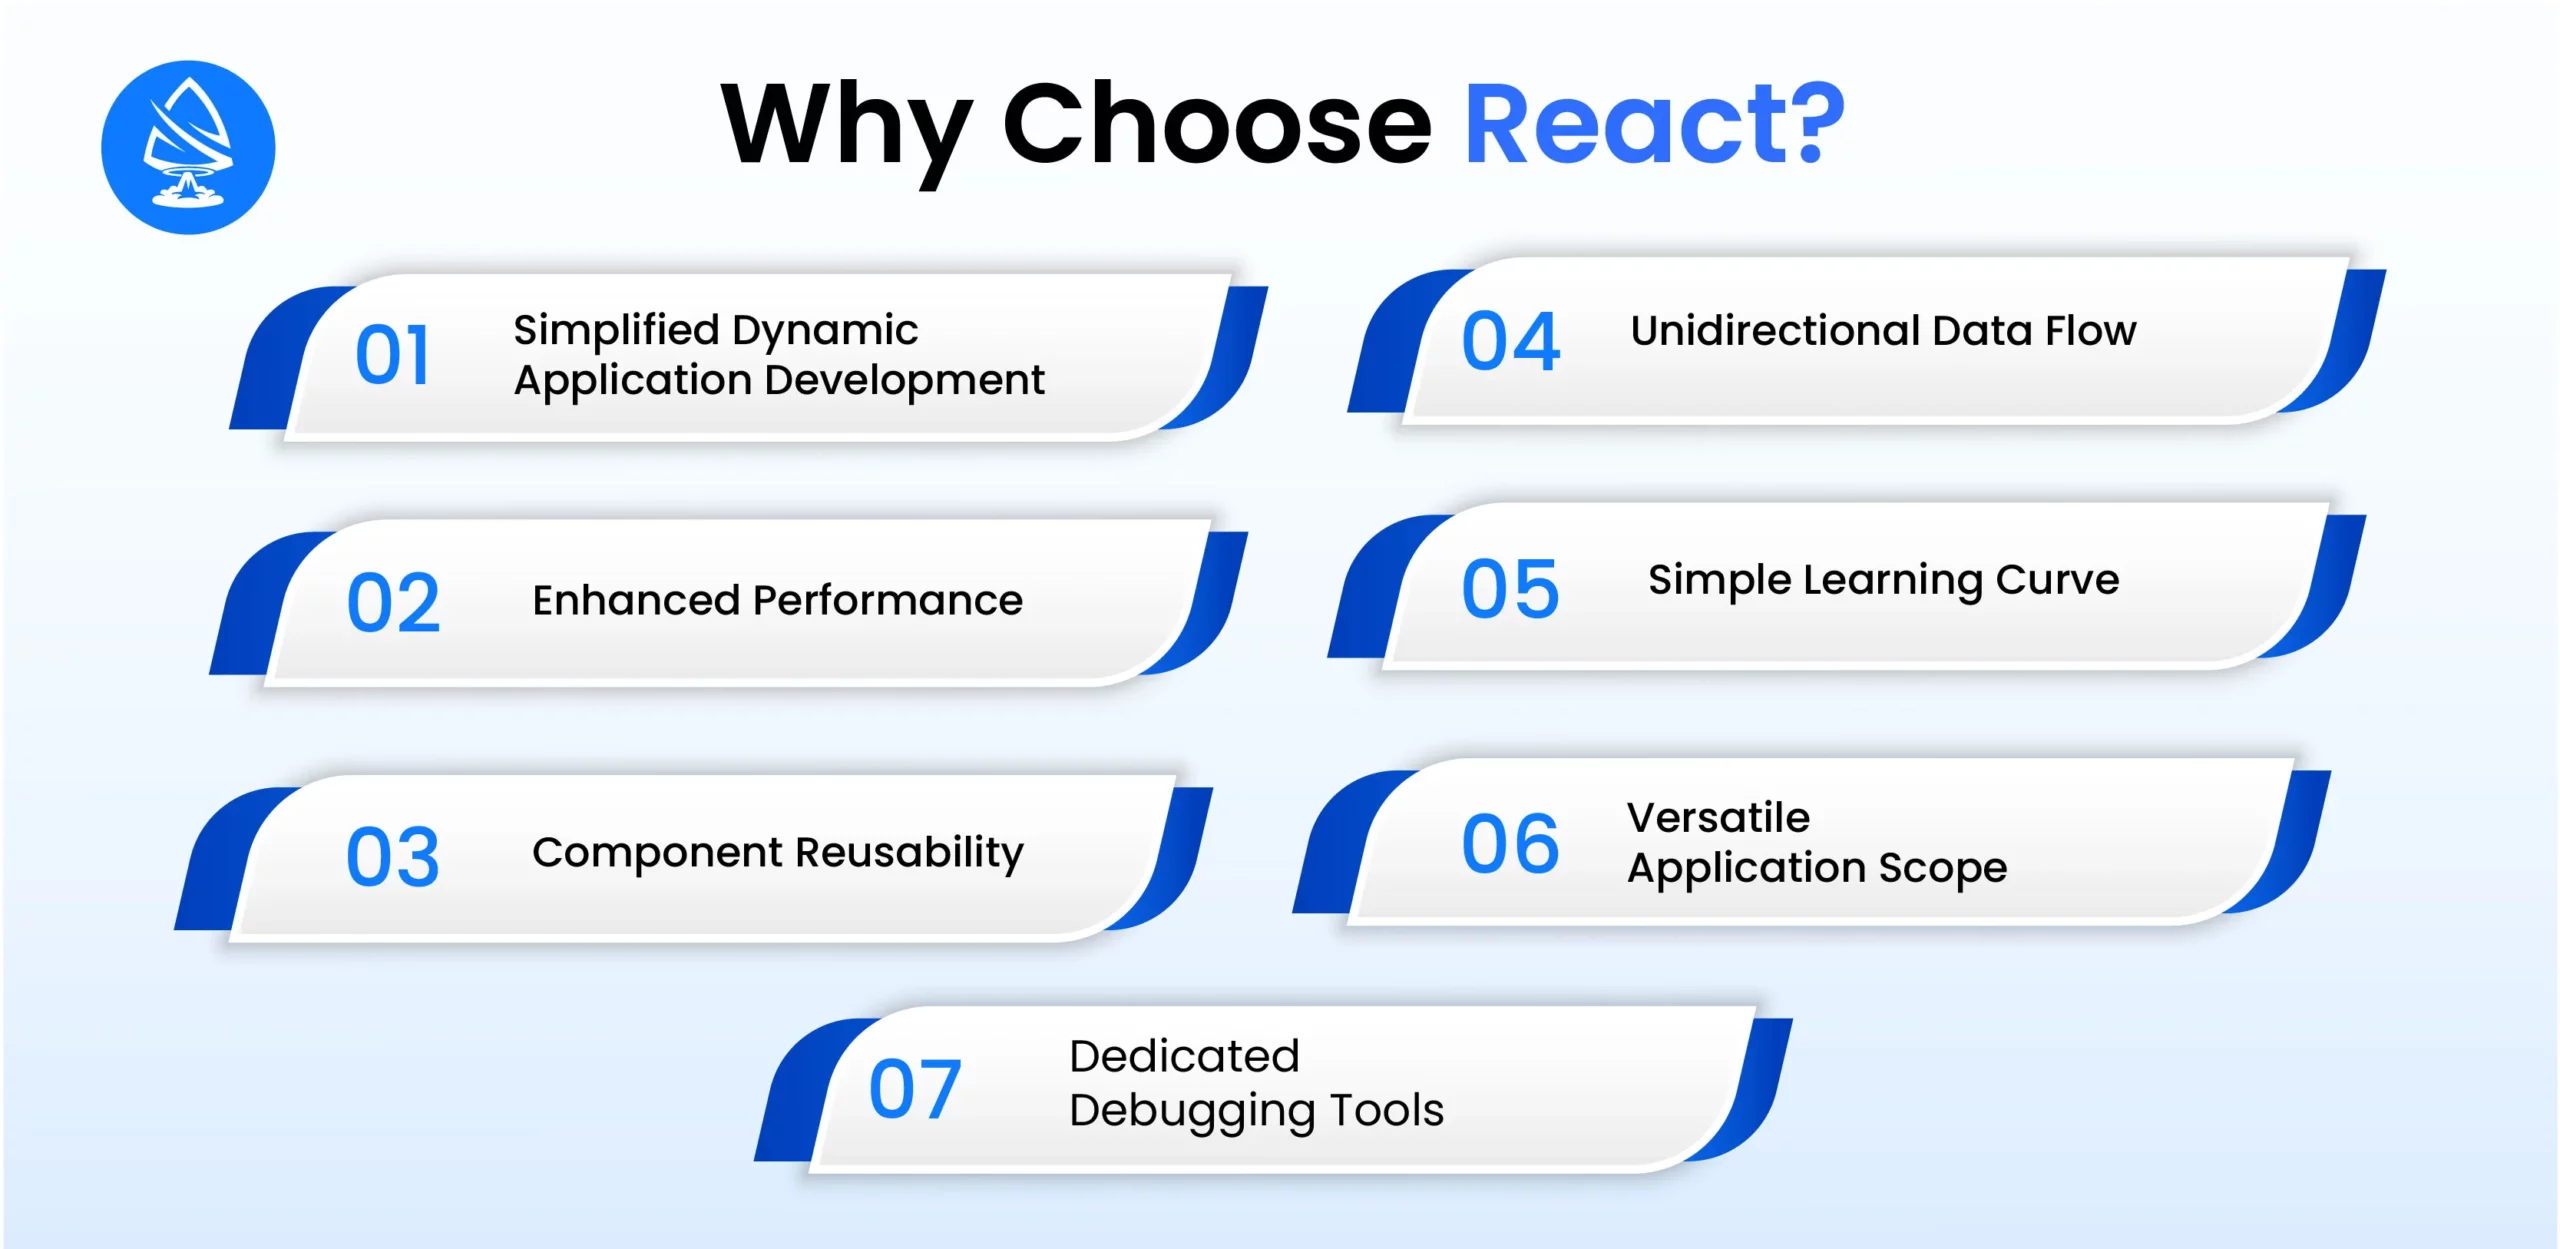 Why Choose React?